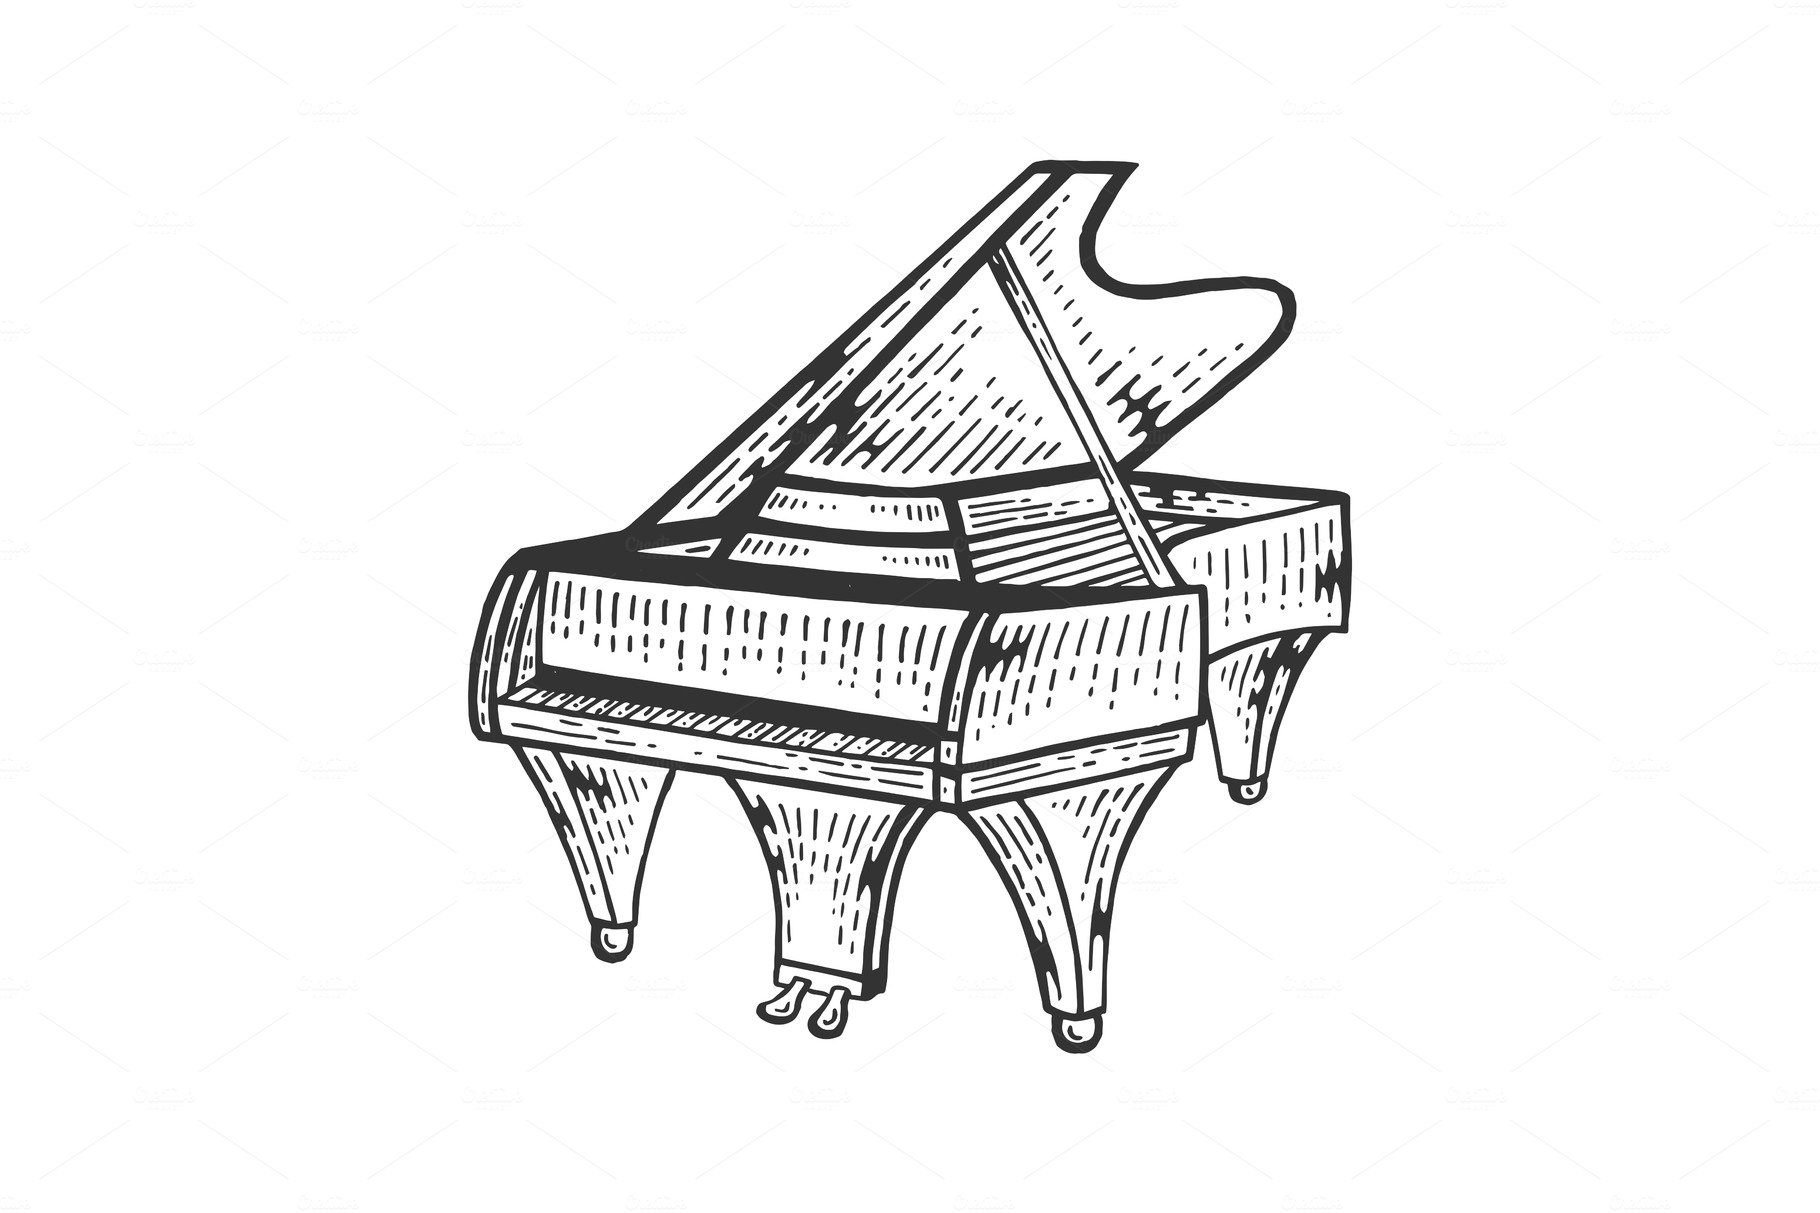 Grand piano sketch engraving vector cover image.